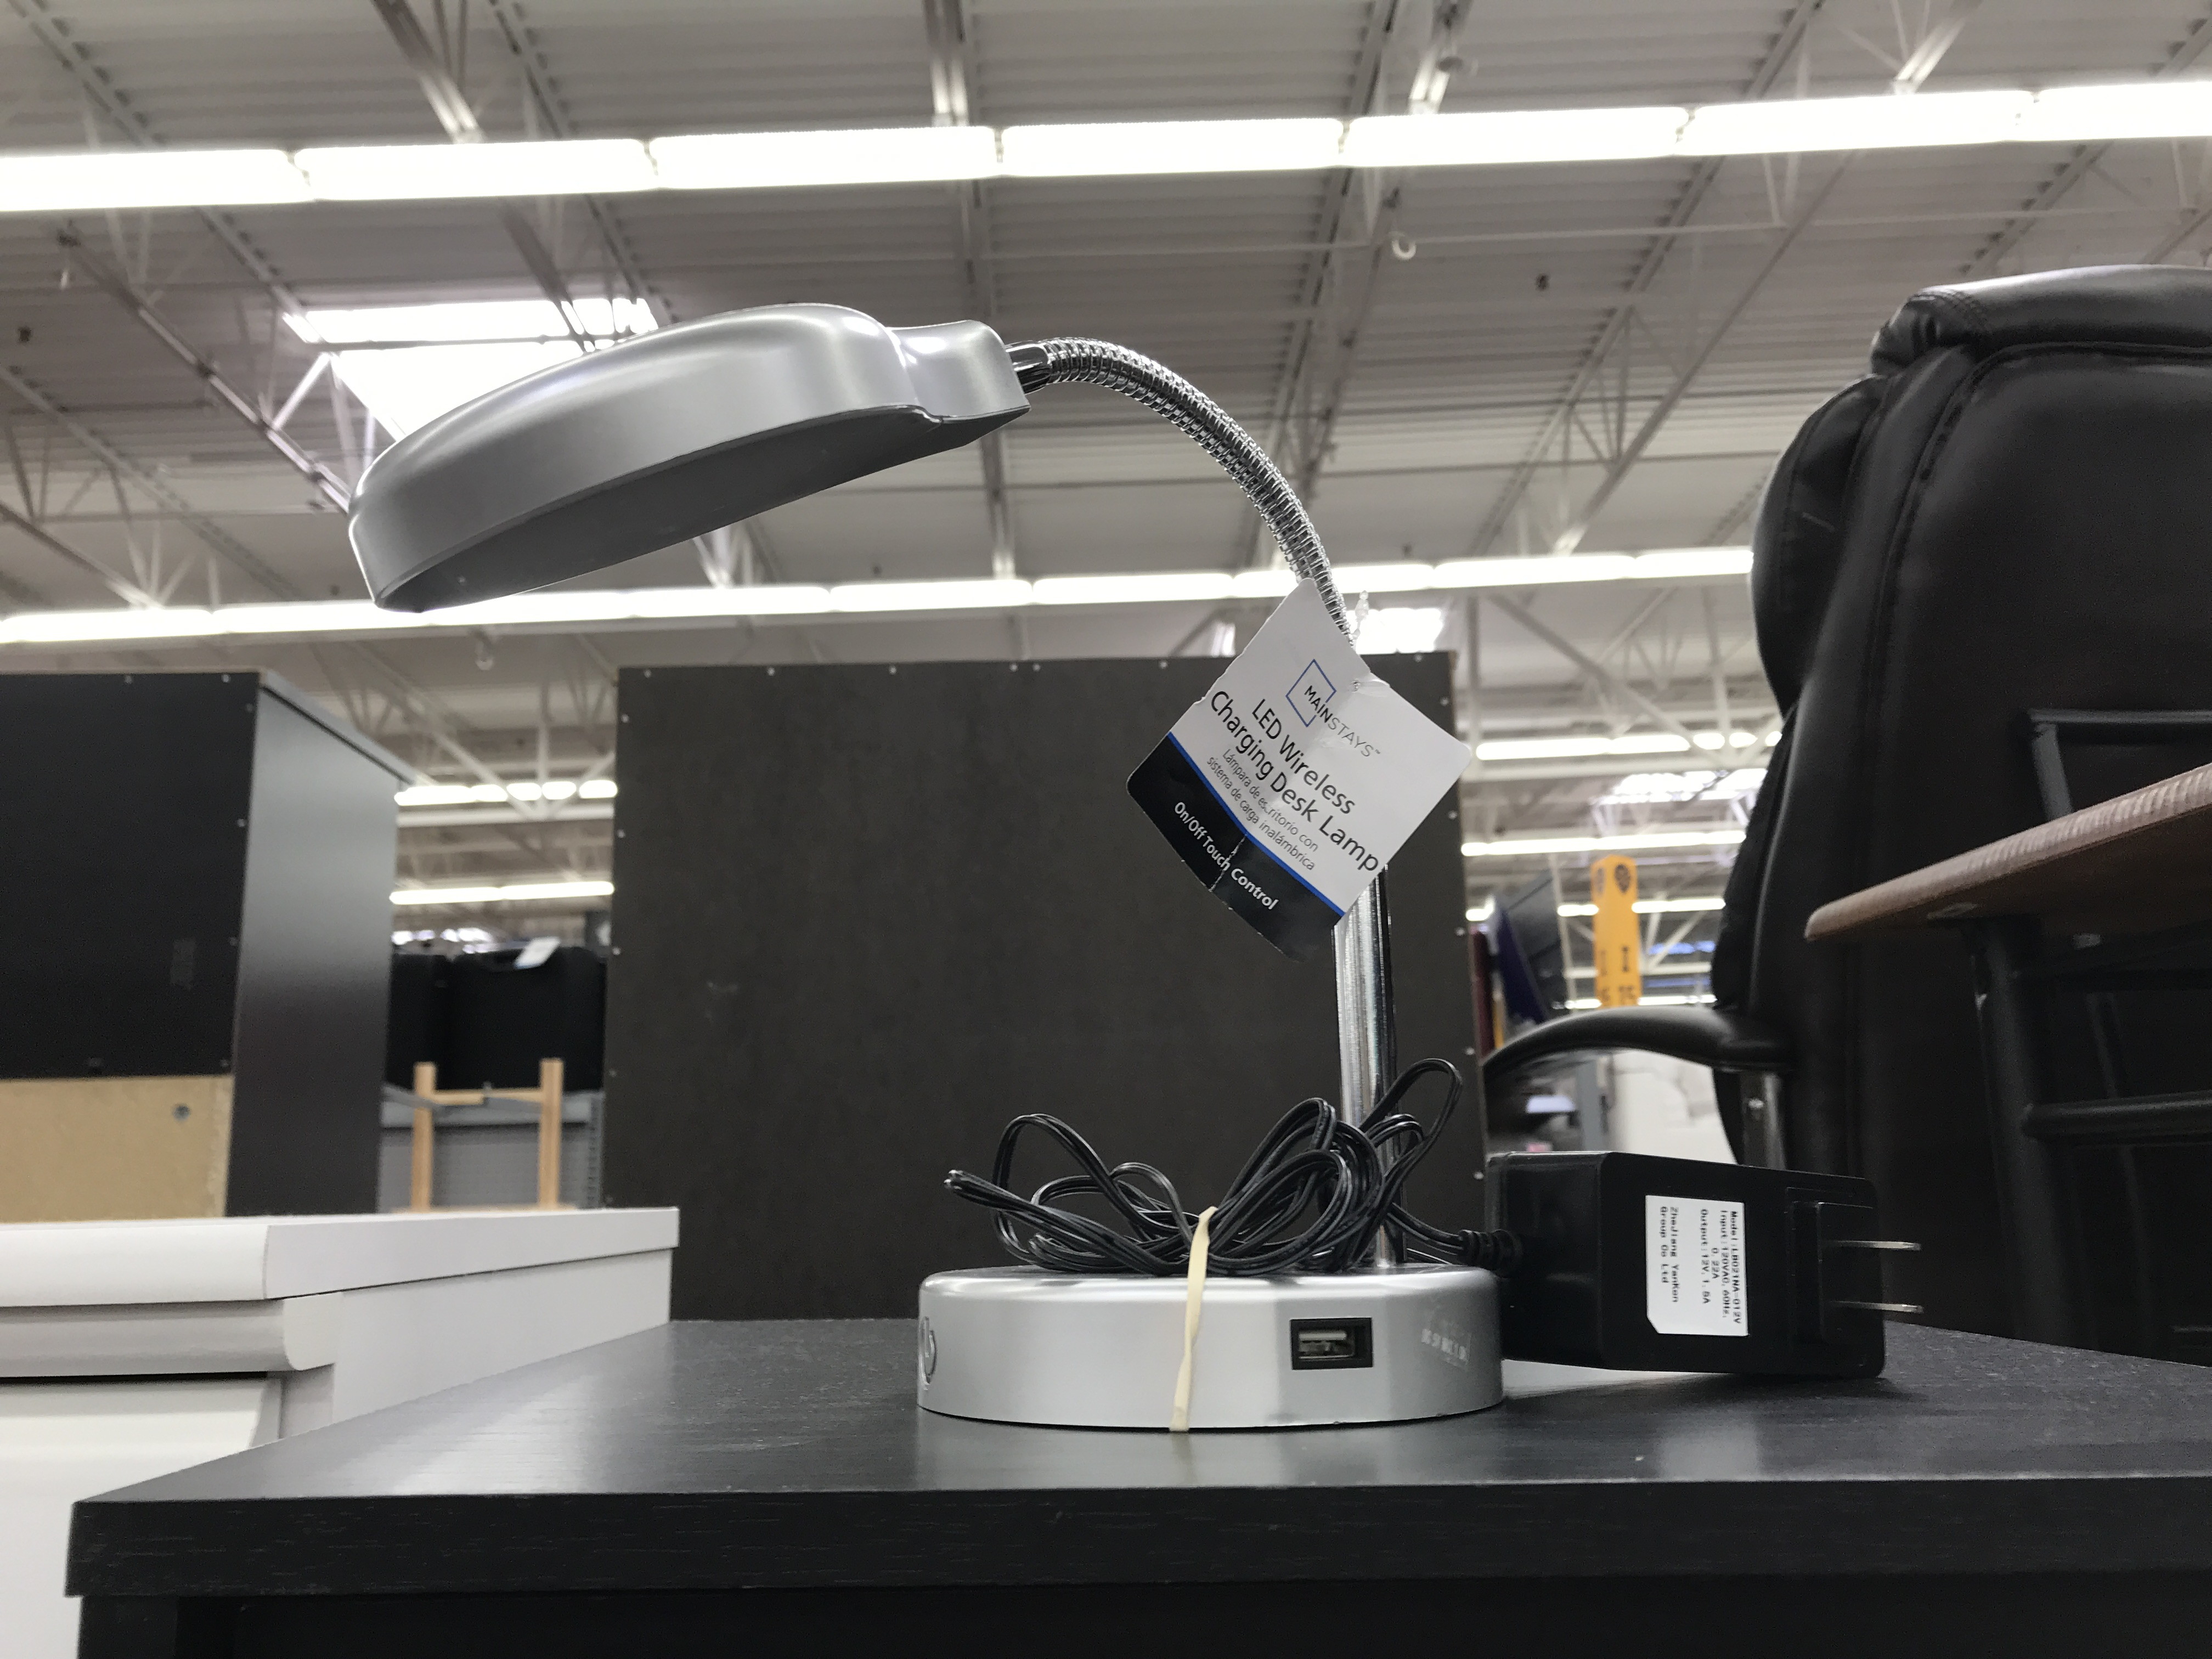 10 Led Desk Lamp W Wireless Charging Usb Port At Walmart The